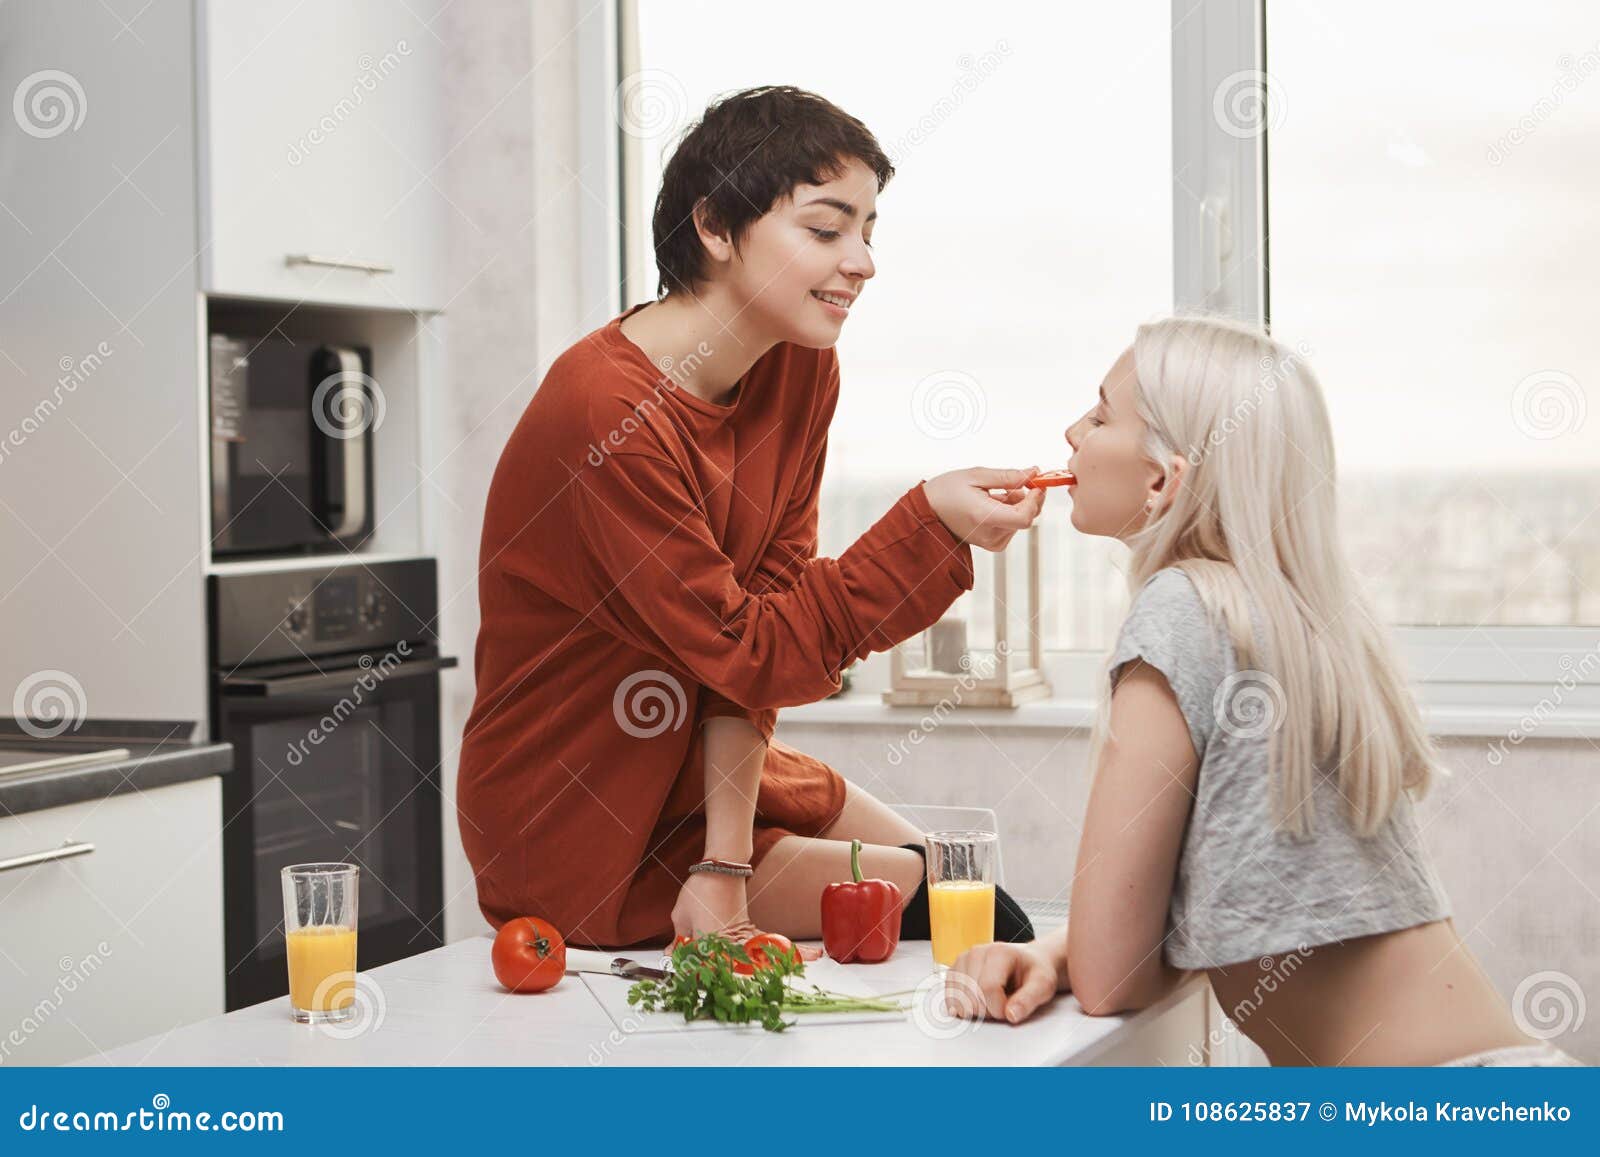 https://thumbs.dreamstime.com/z/sweet-cute-indoor-shot-hot-shirt-haired-woman-feeding-her-girlfriend-sitting-kitchen-table-preparing-women-108625837.jpg